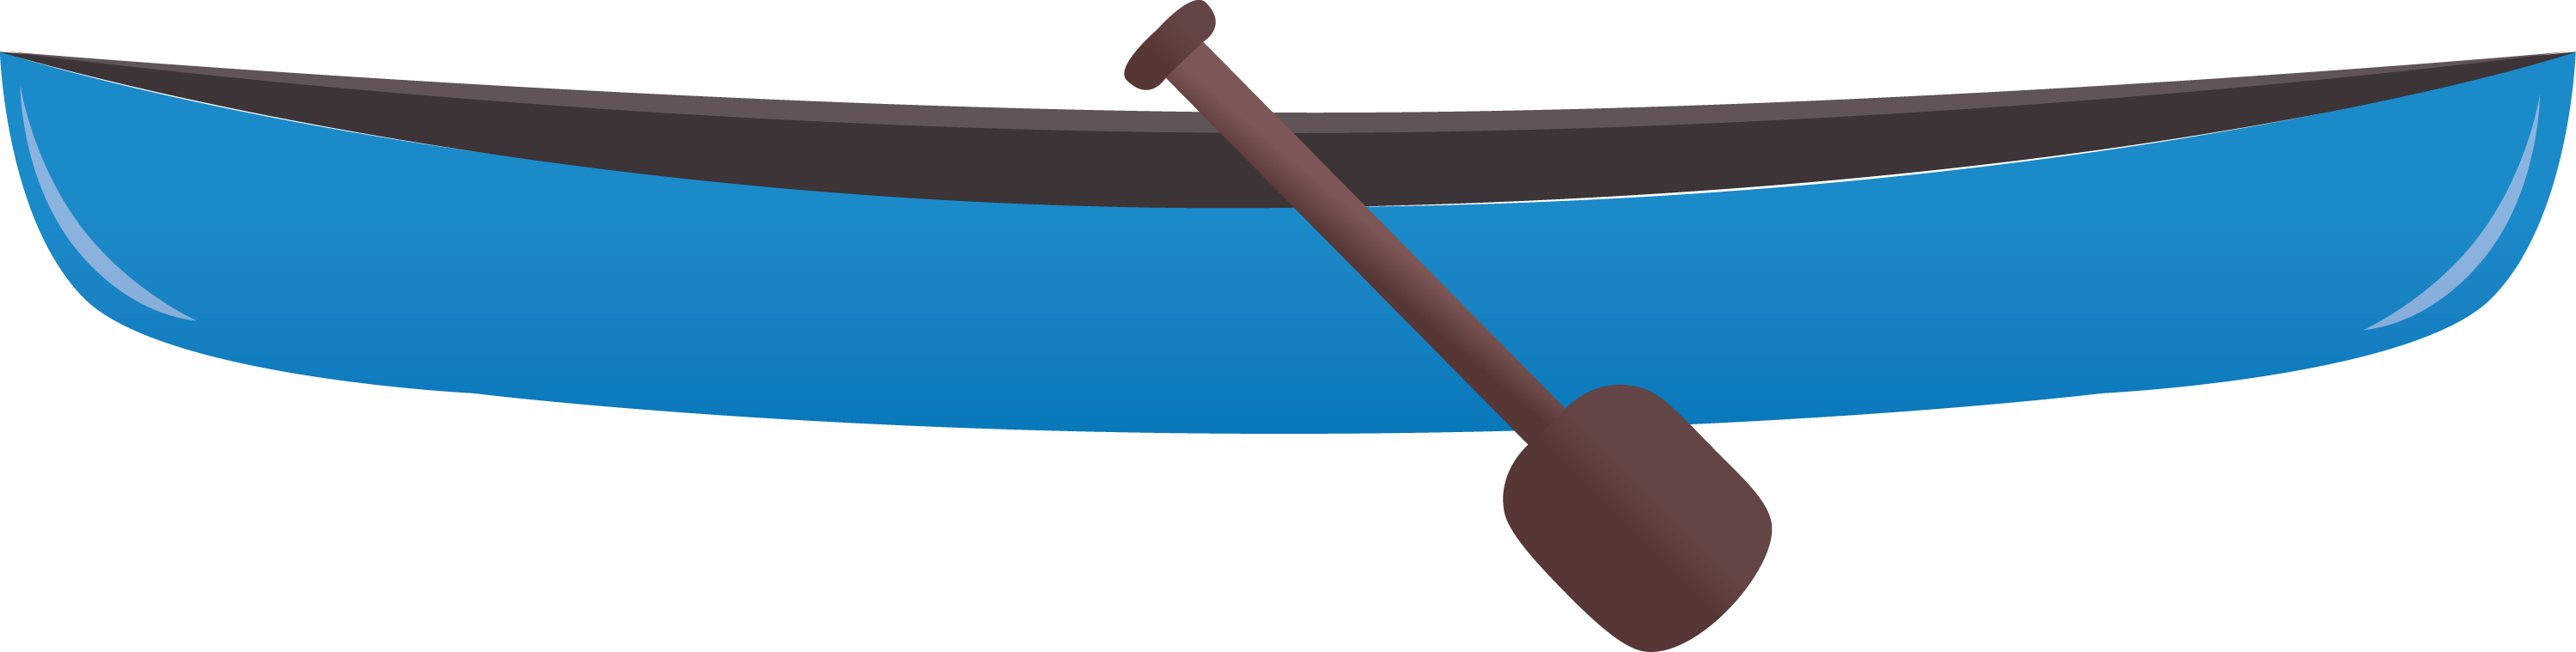 Canoe PNG Image